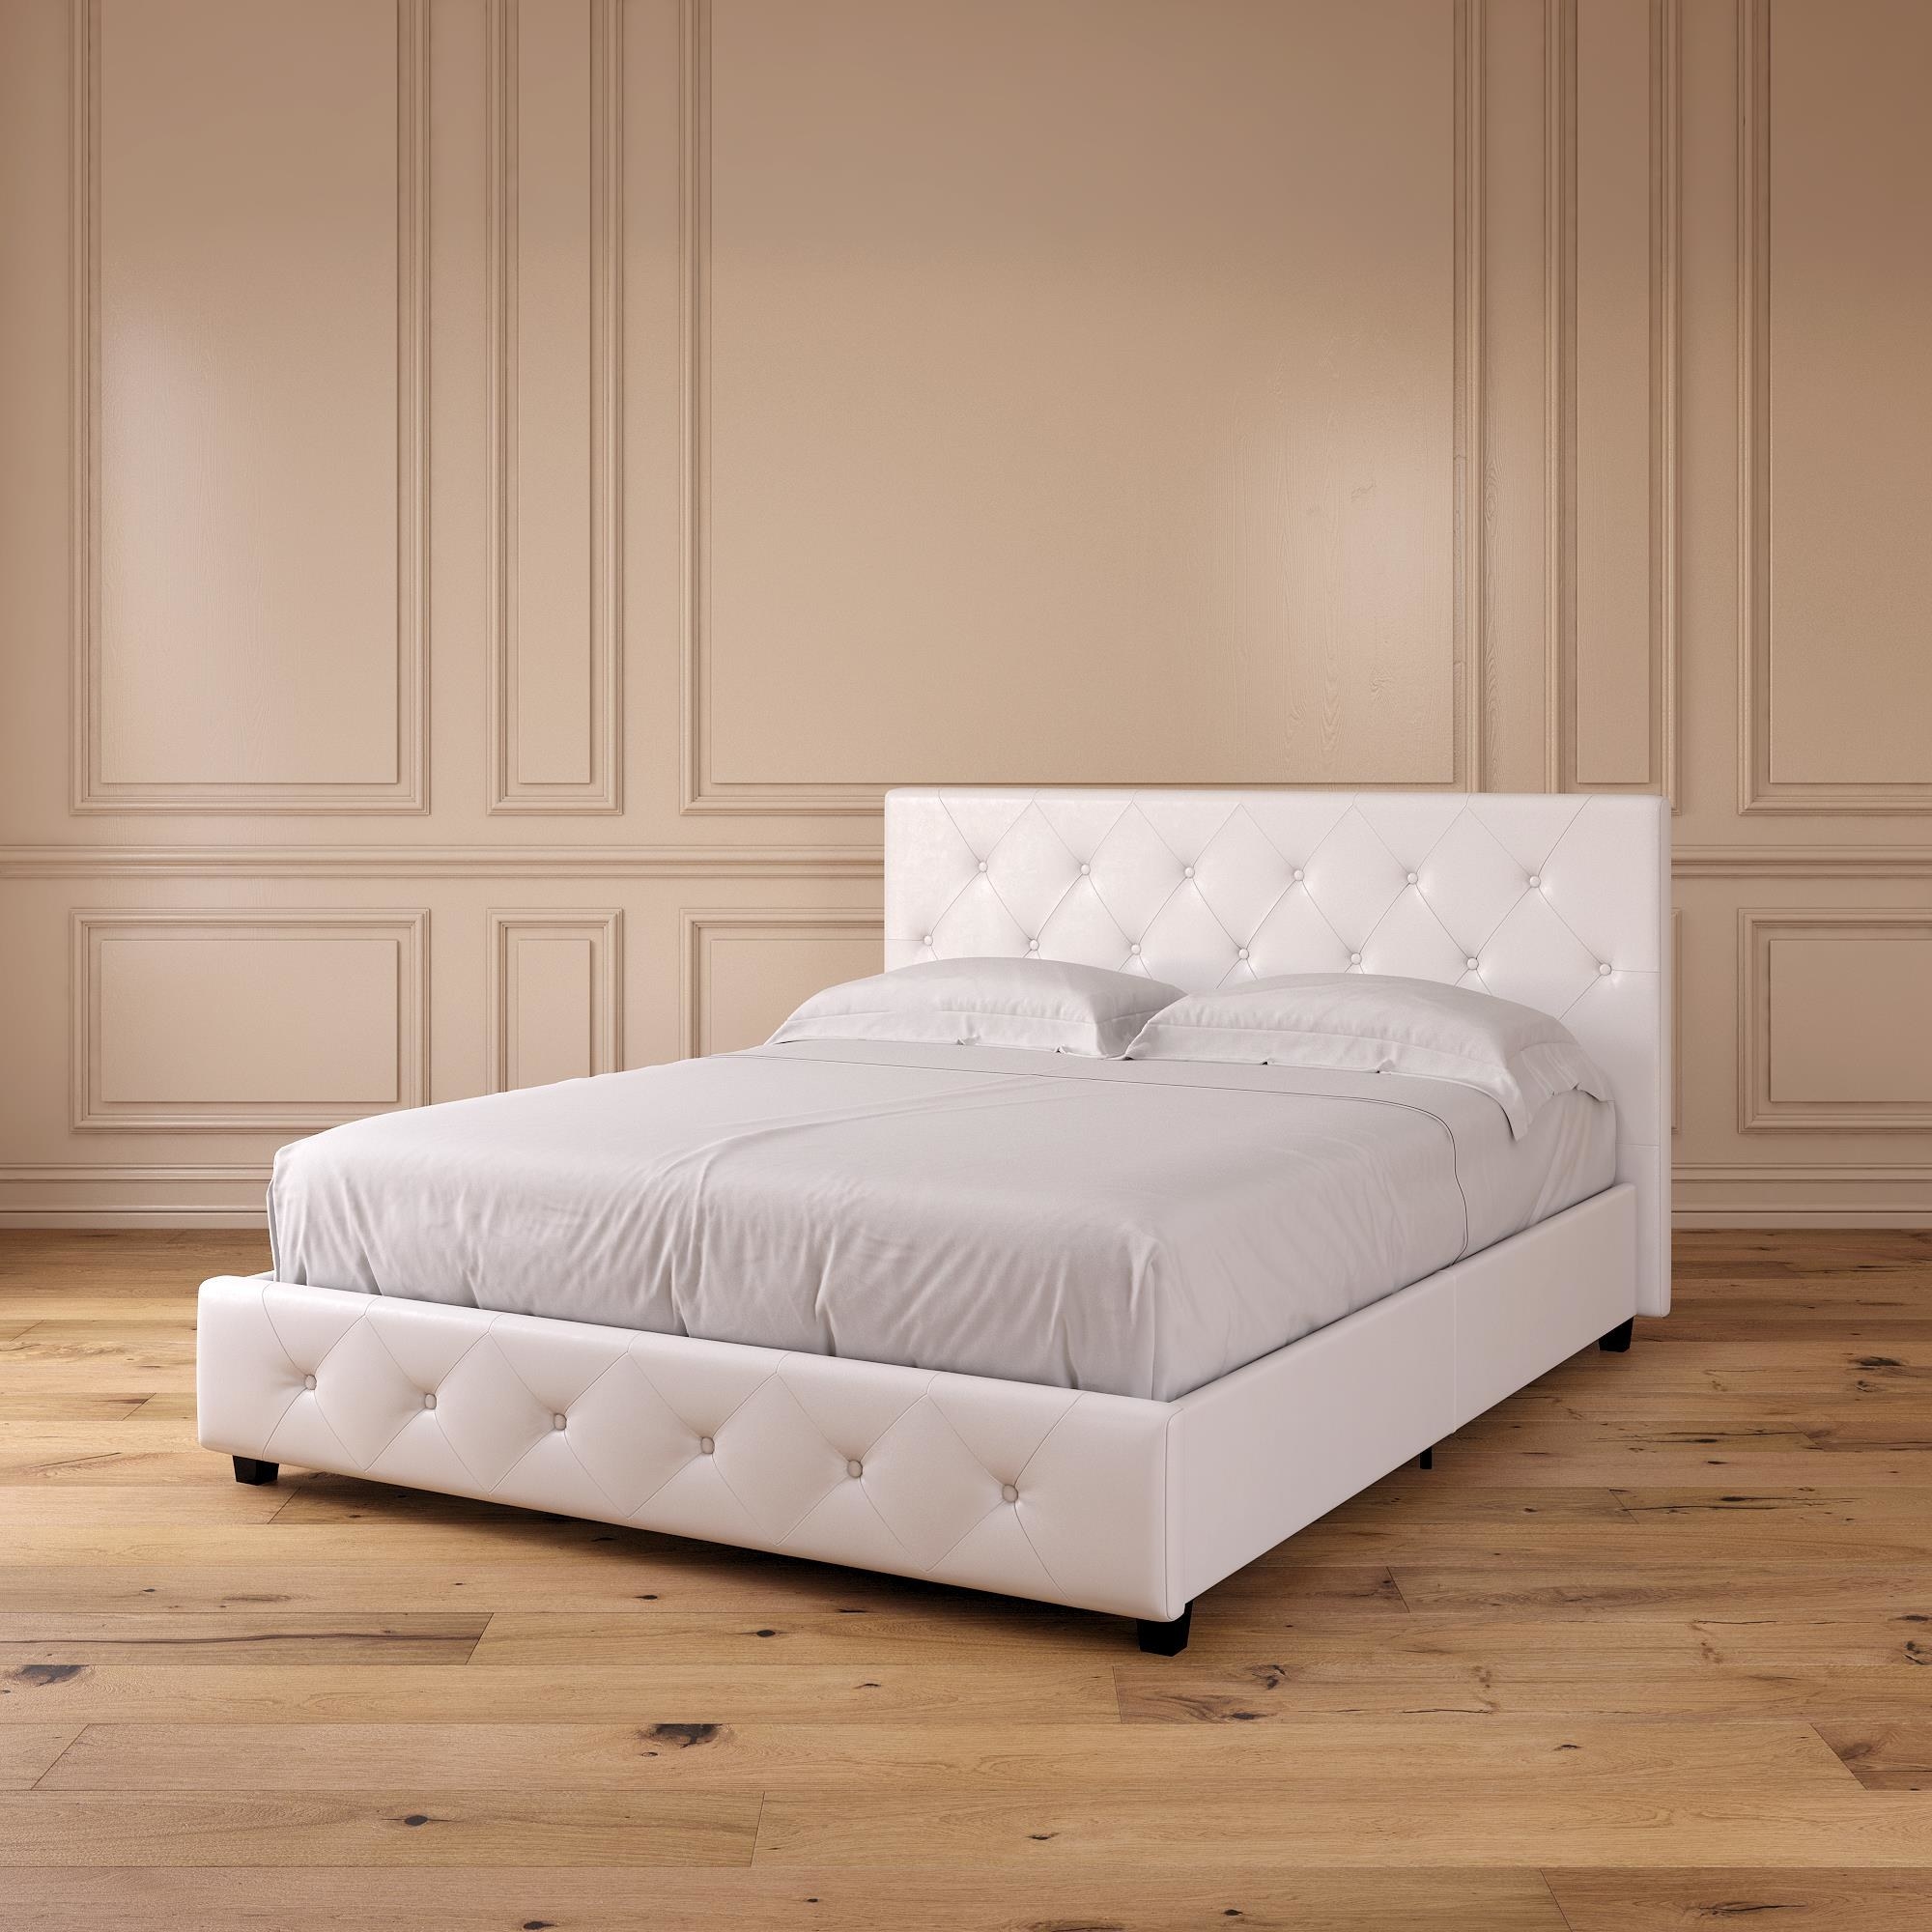 White platform bed